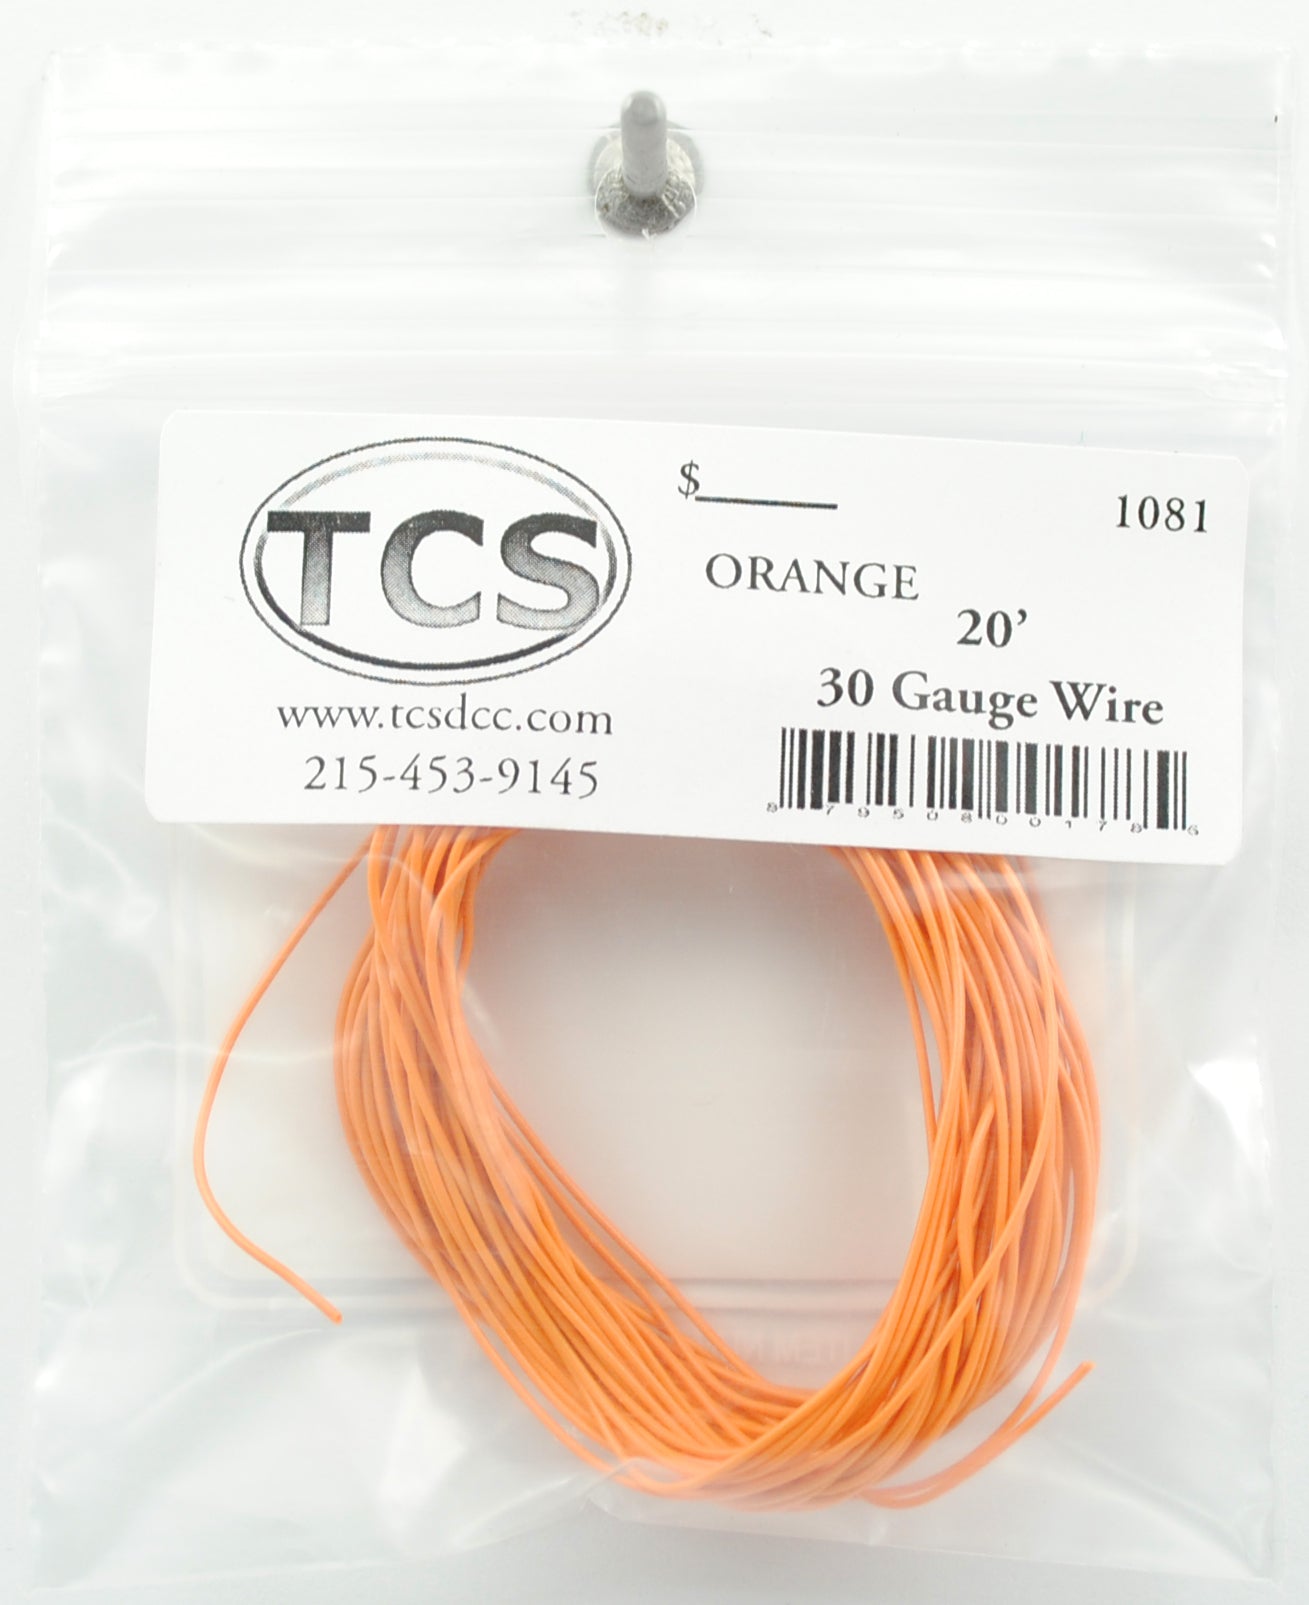 Train Control Systems 1081 Orange 20' of 30 Gauge Wire